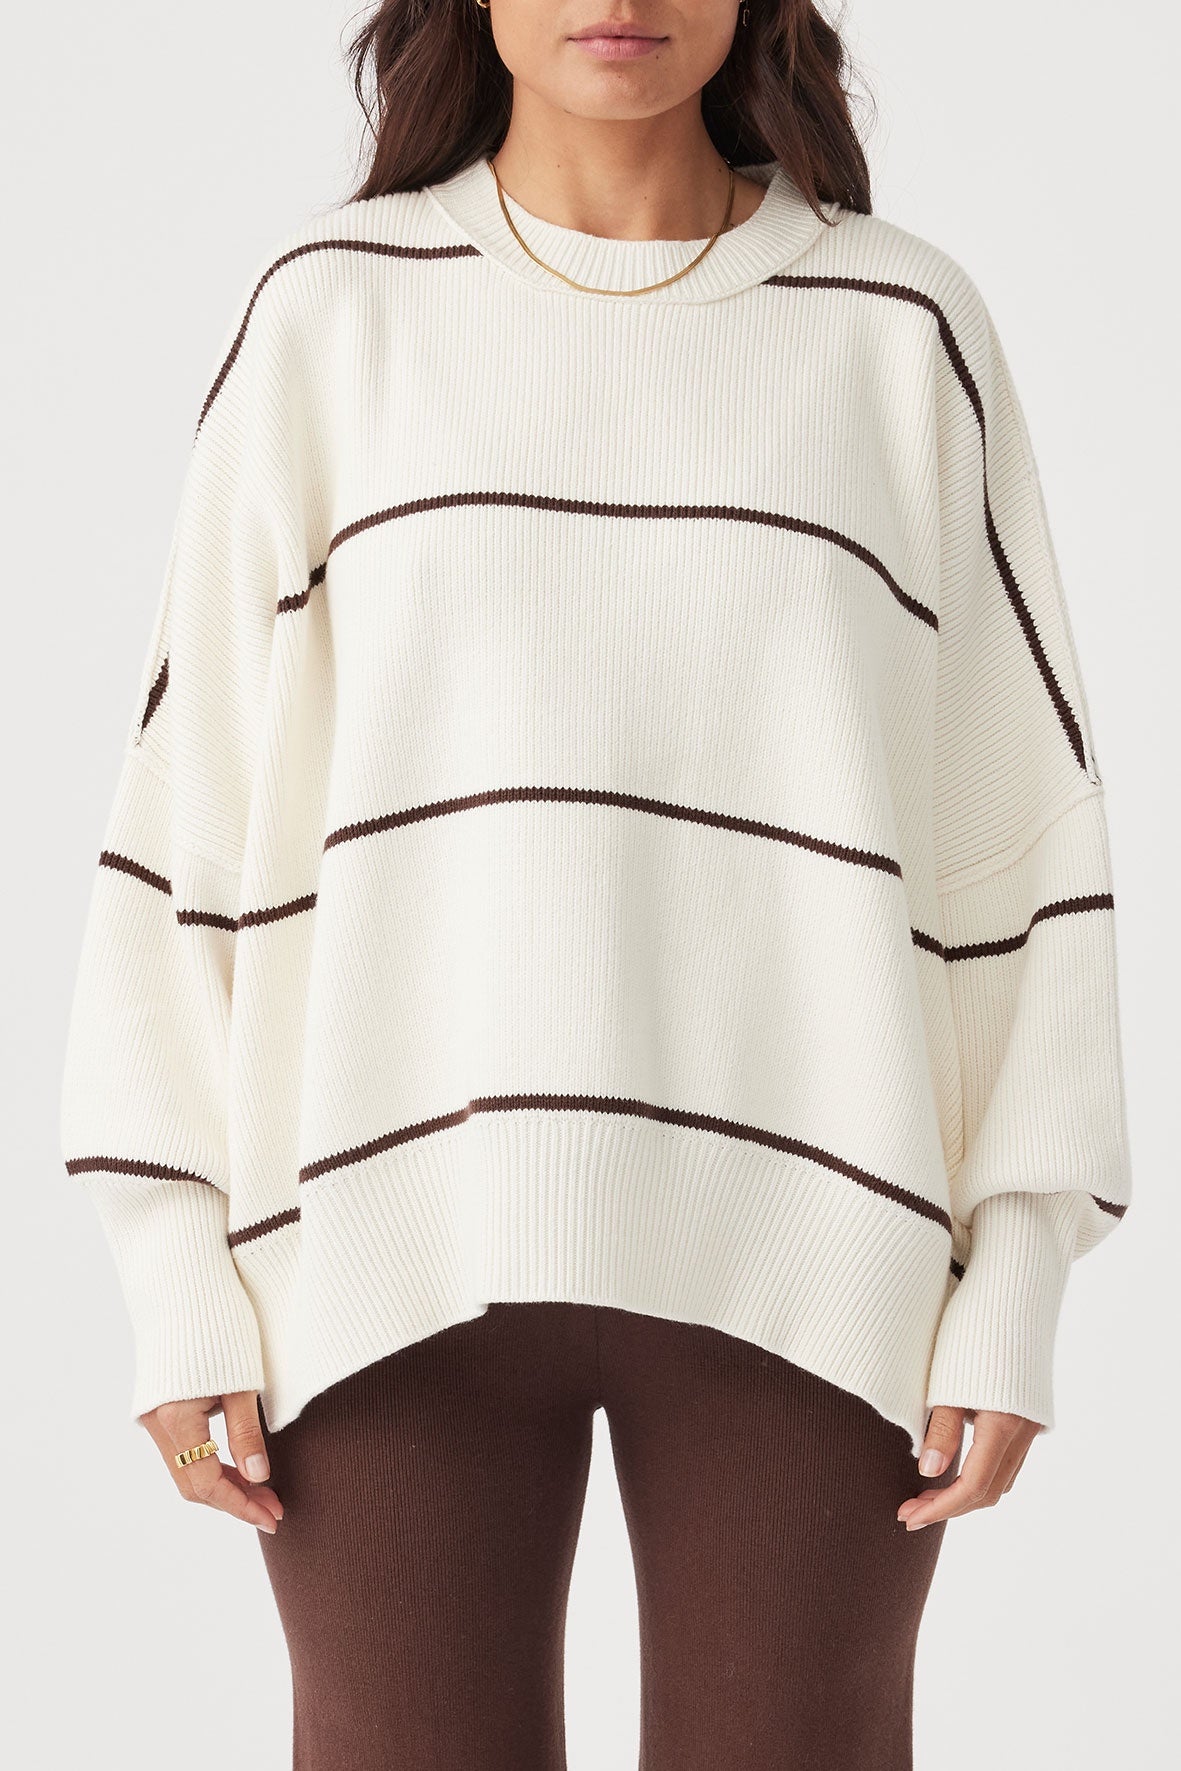 ARCAA harper stripe sweater- cream/chocolate